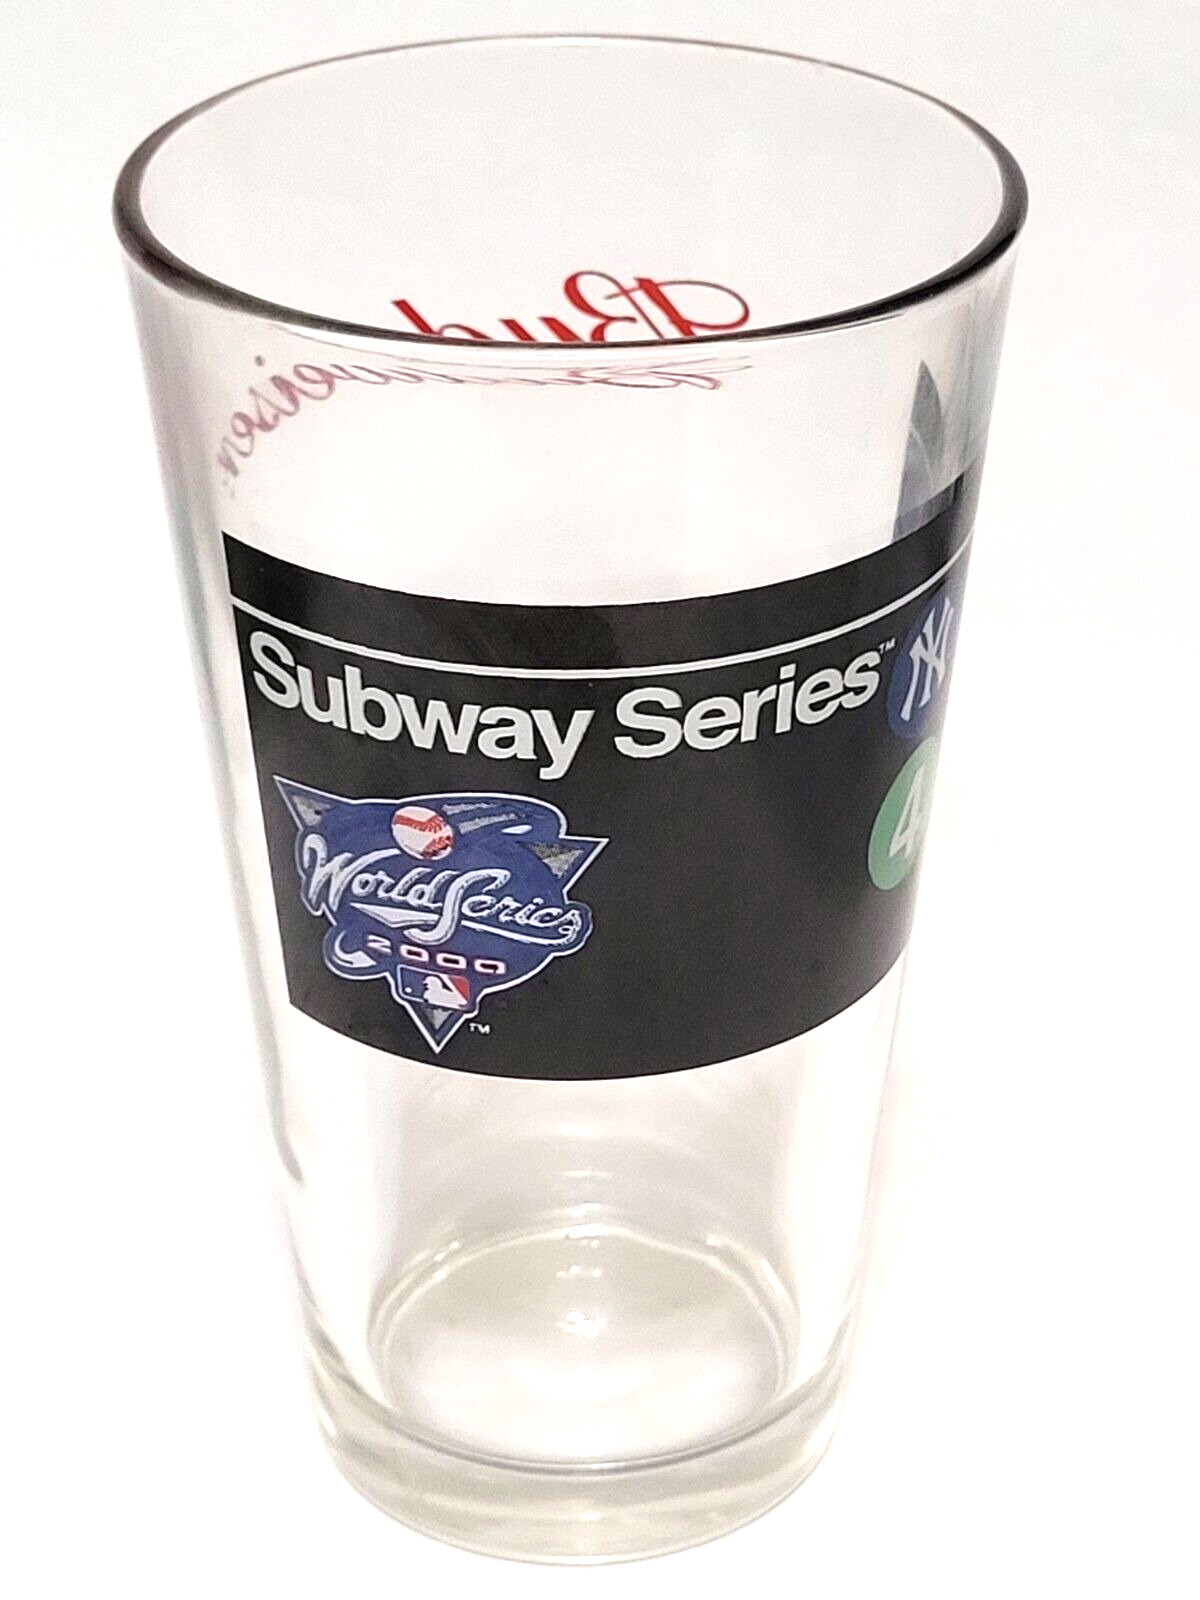 VTG Budweiser 2000 World Series - Subway Series- 12 0z. Drinking Glass, EUC 